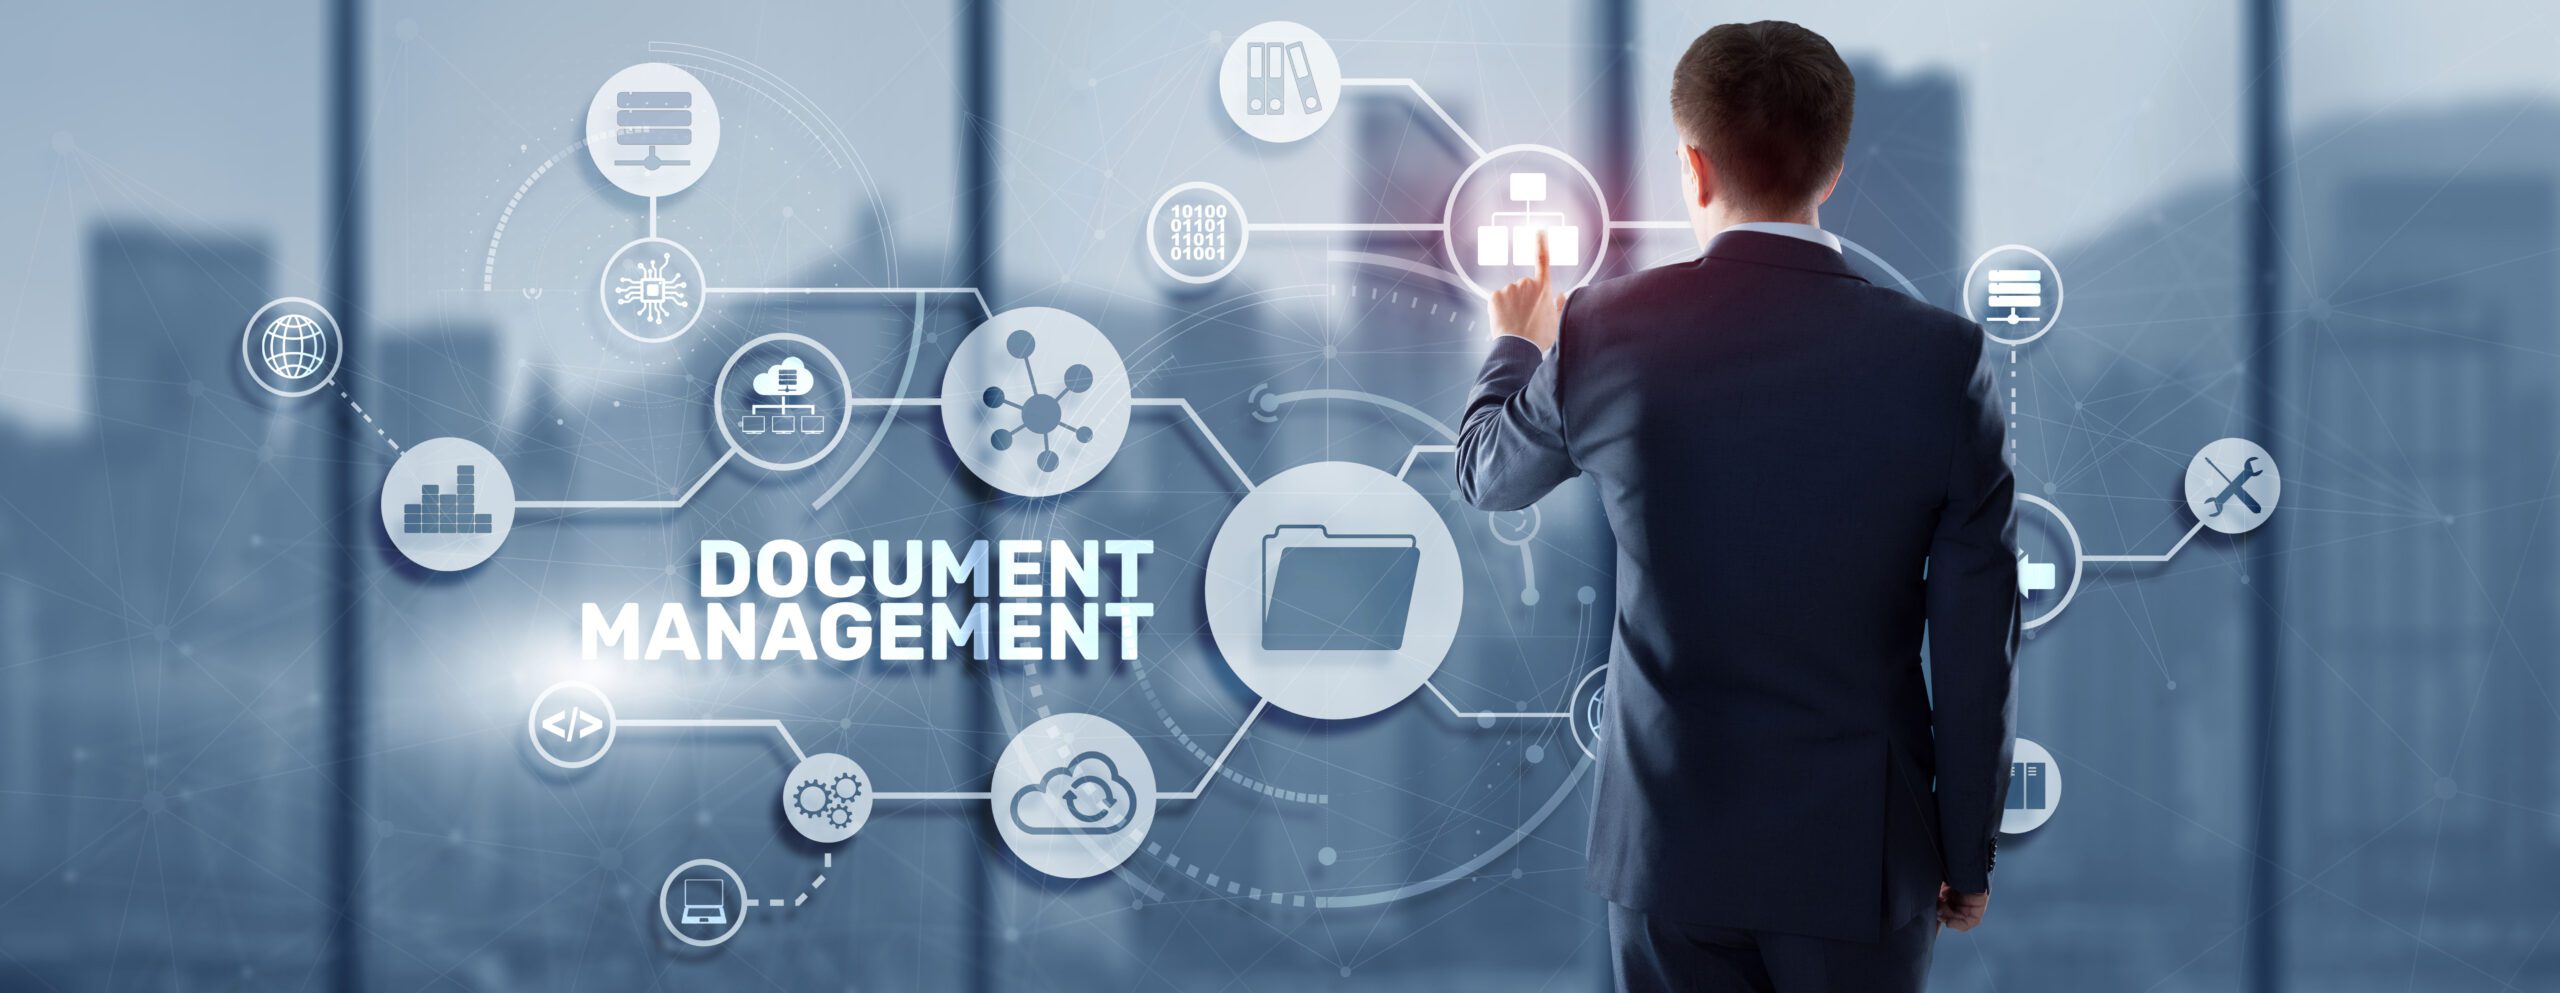 document management scaled